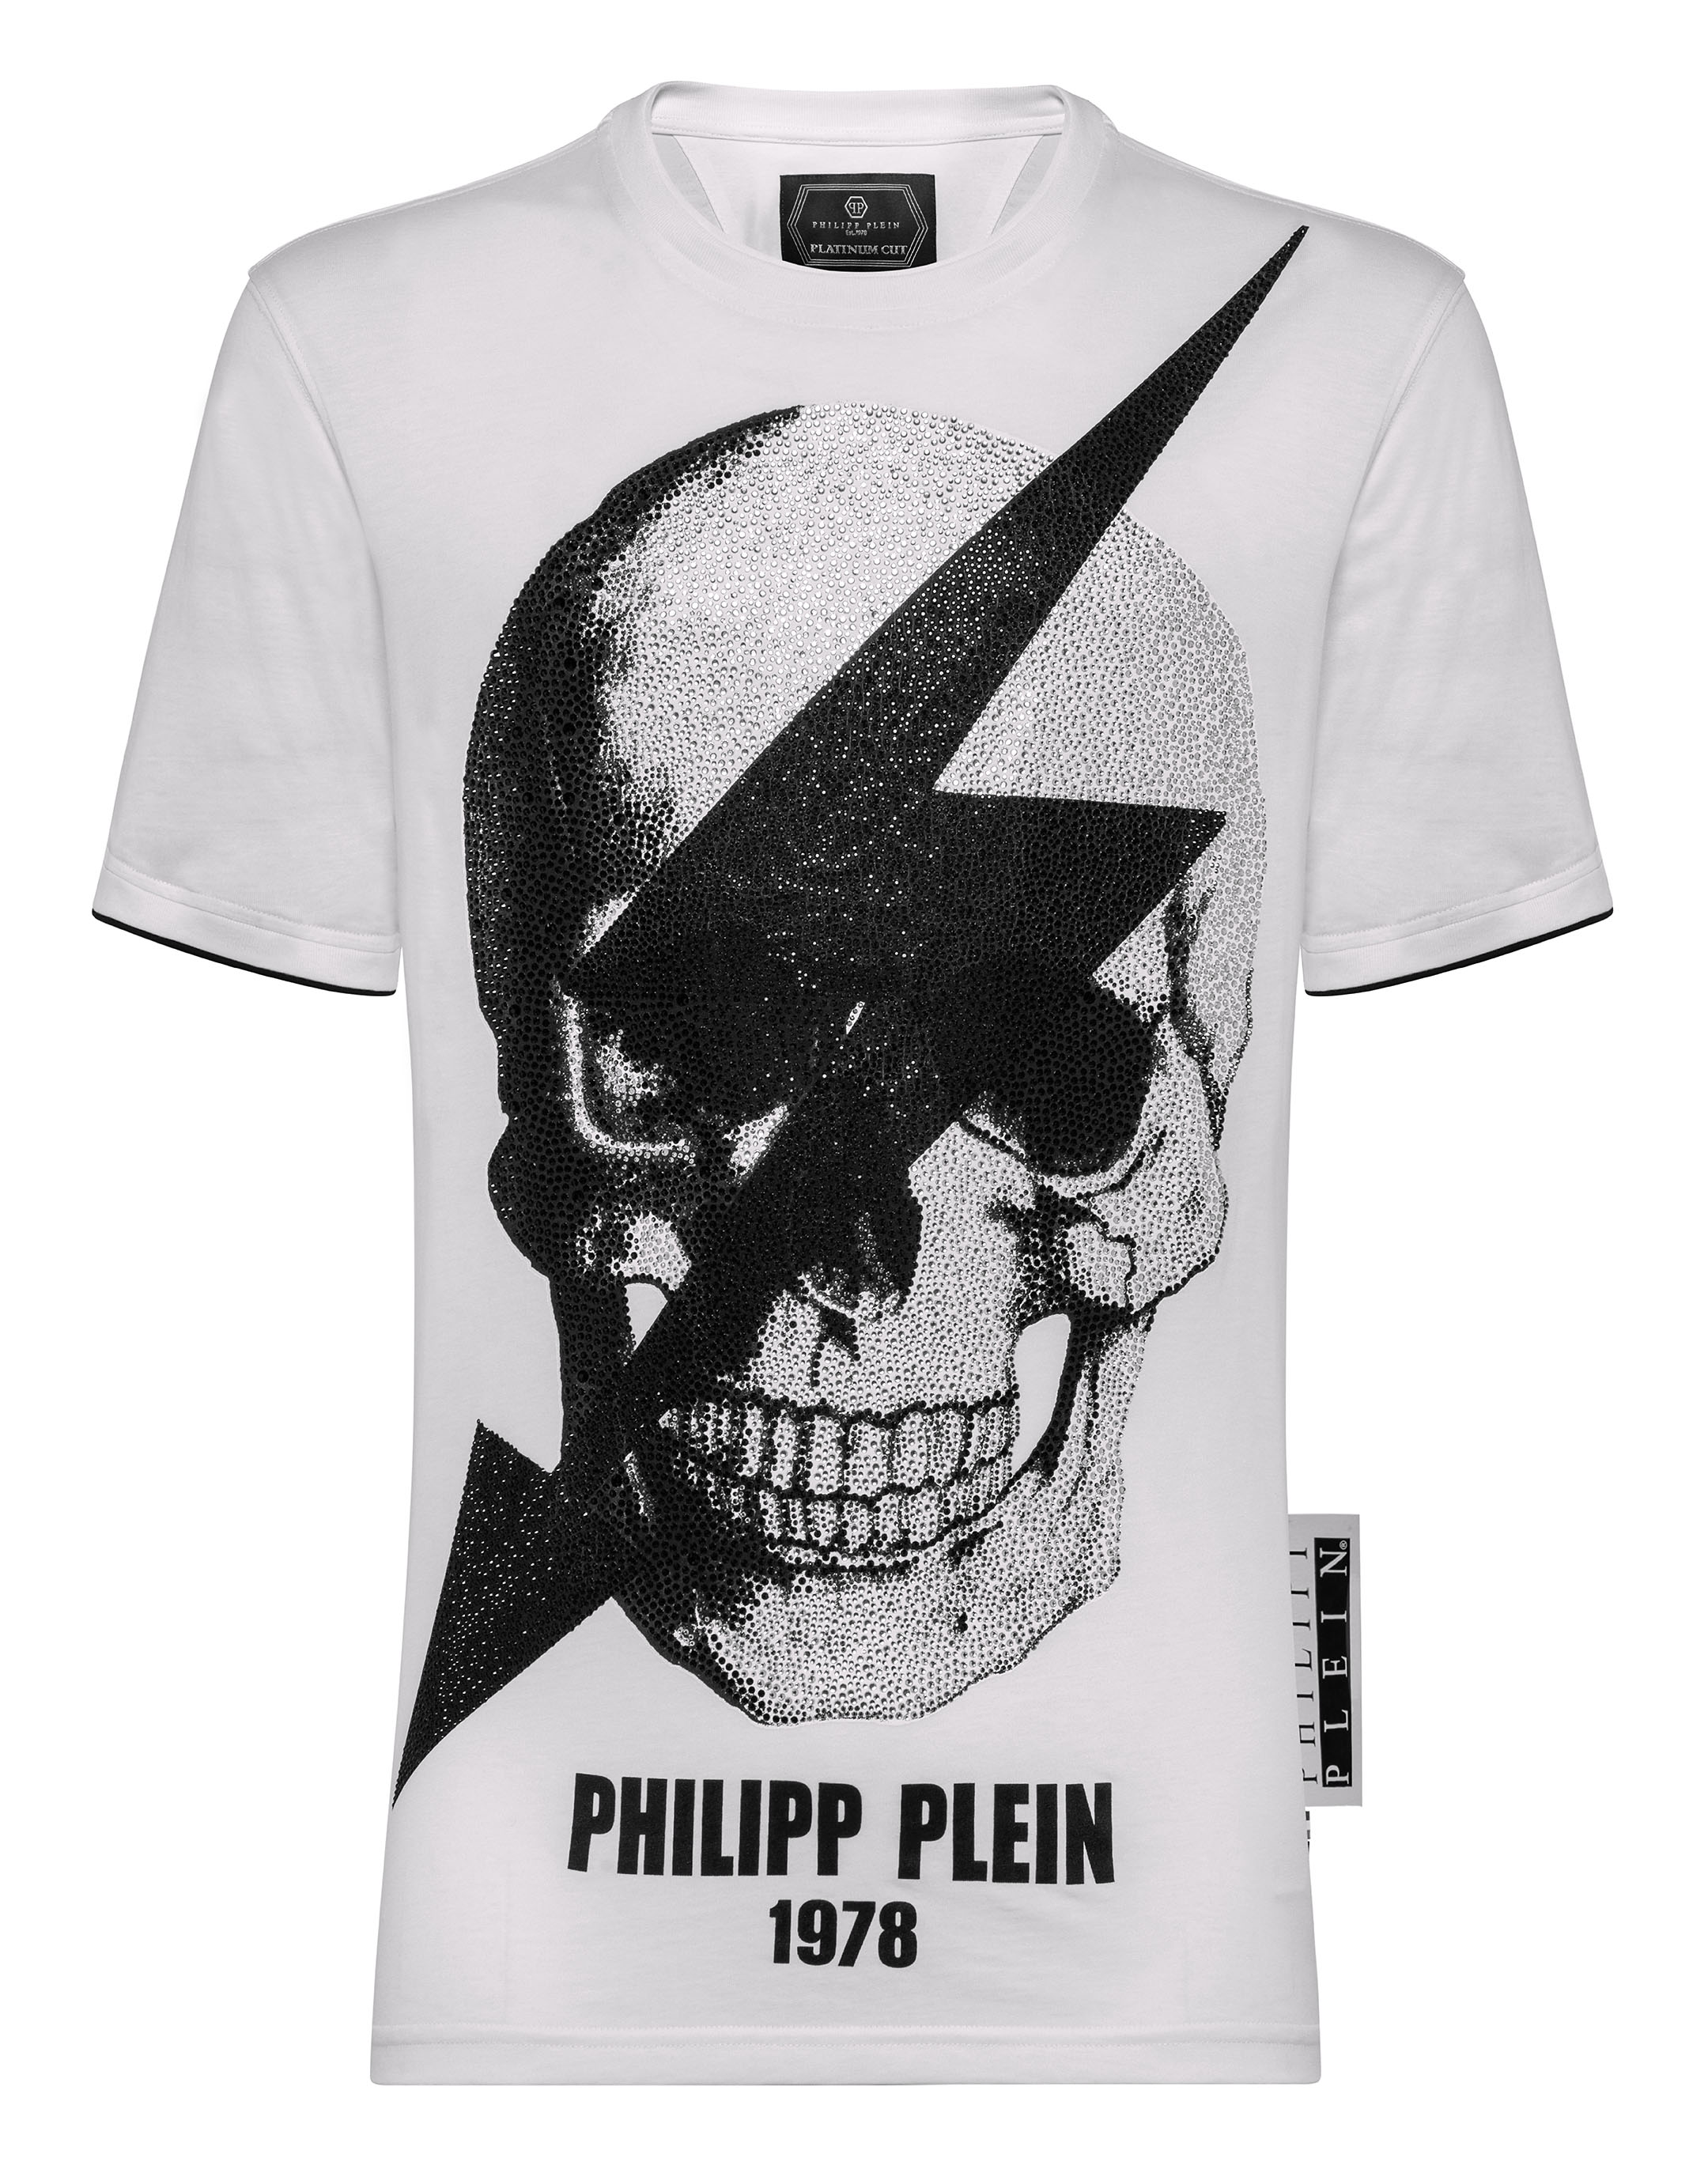 philipp plein shirt in south africa